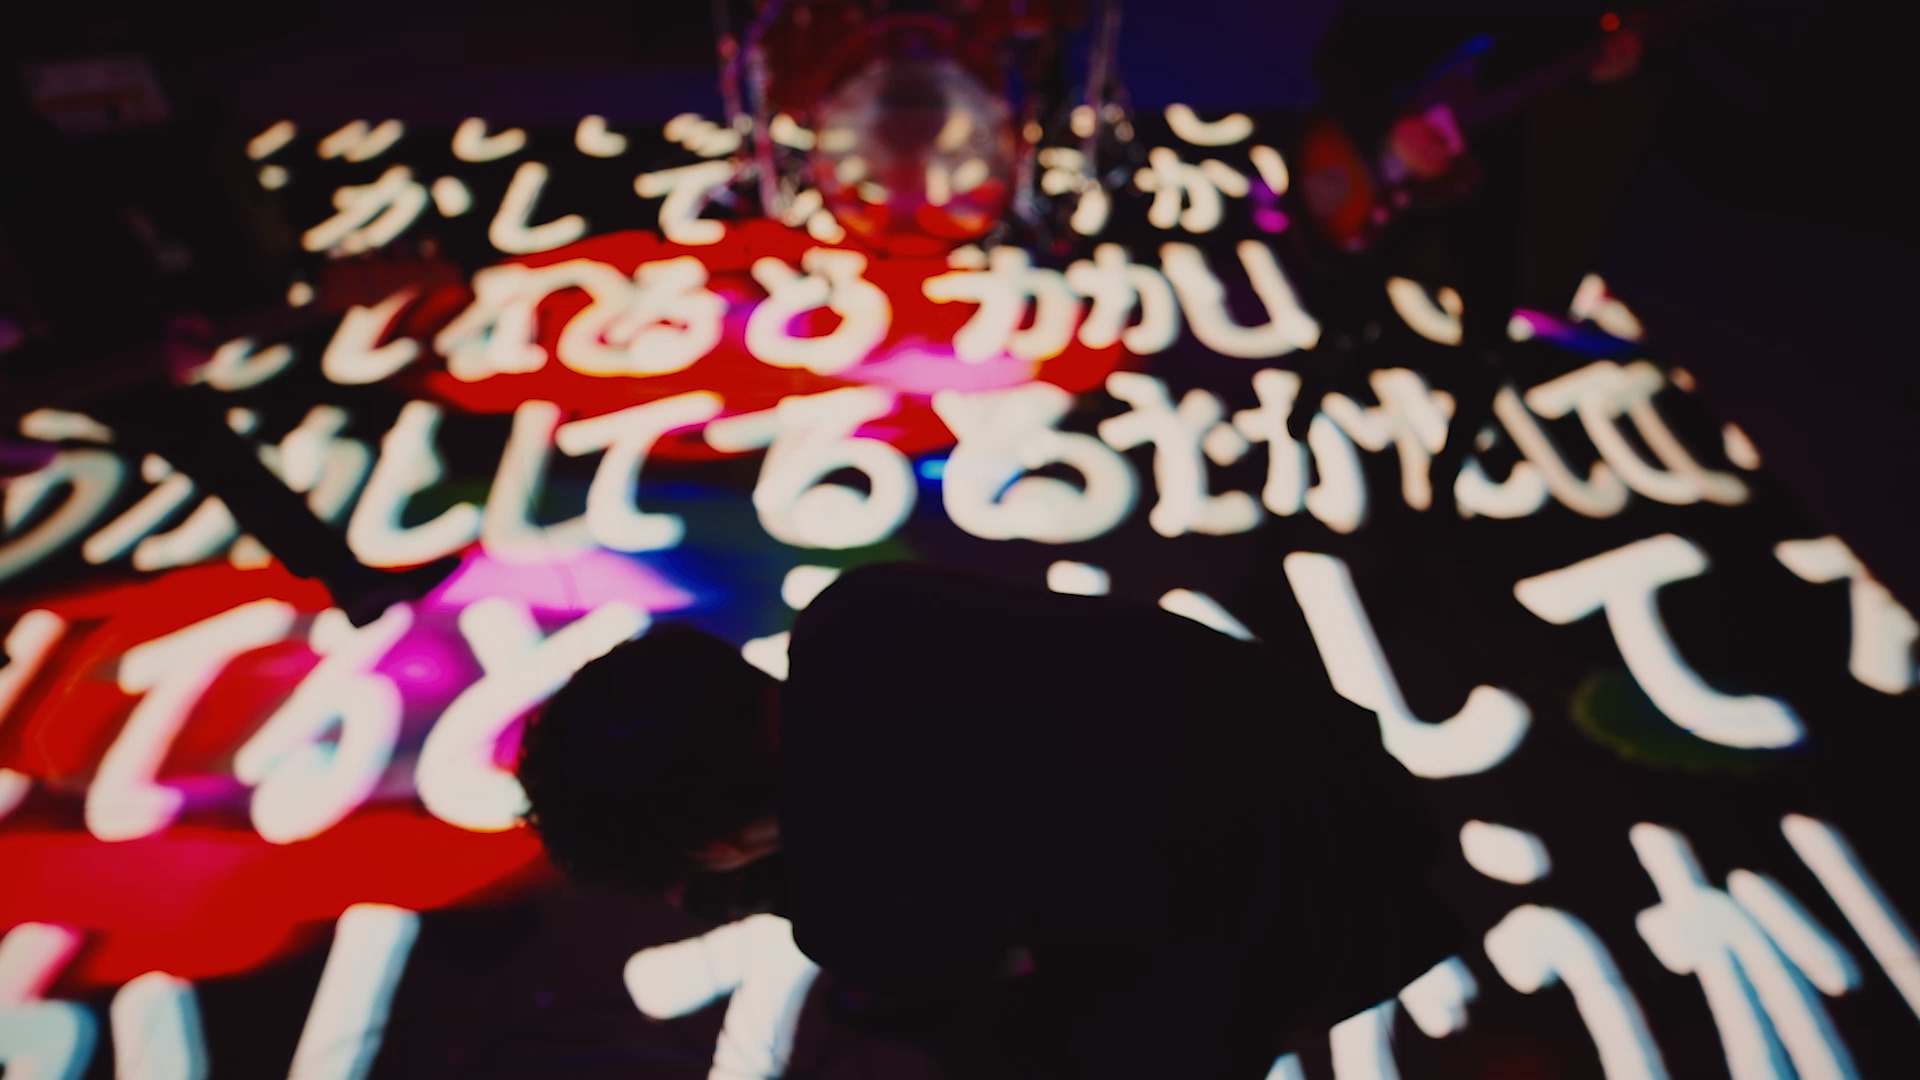 Official髭男dism「Anarchy」MV（モーショングラフィックス）